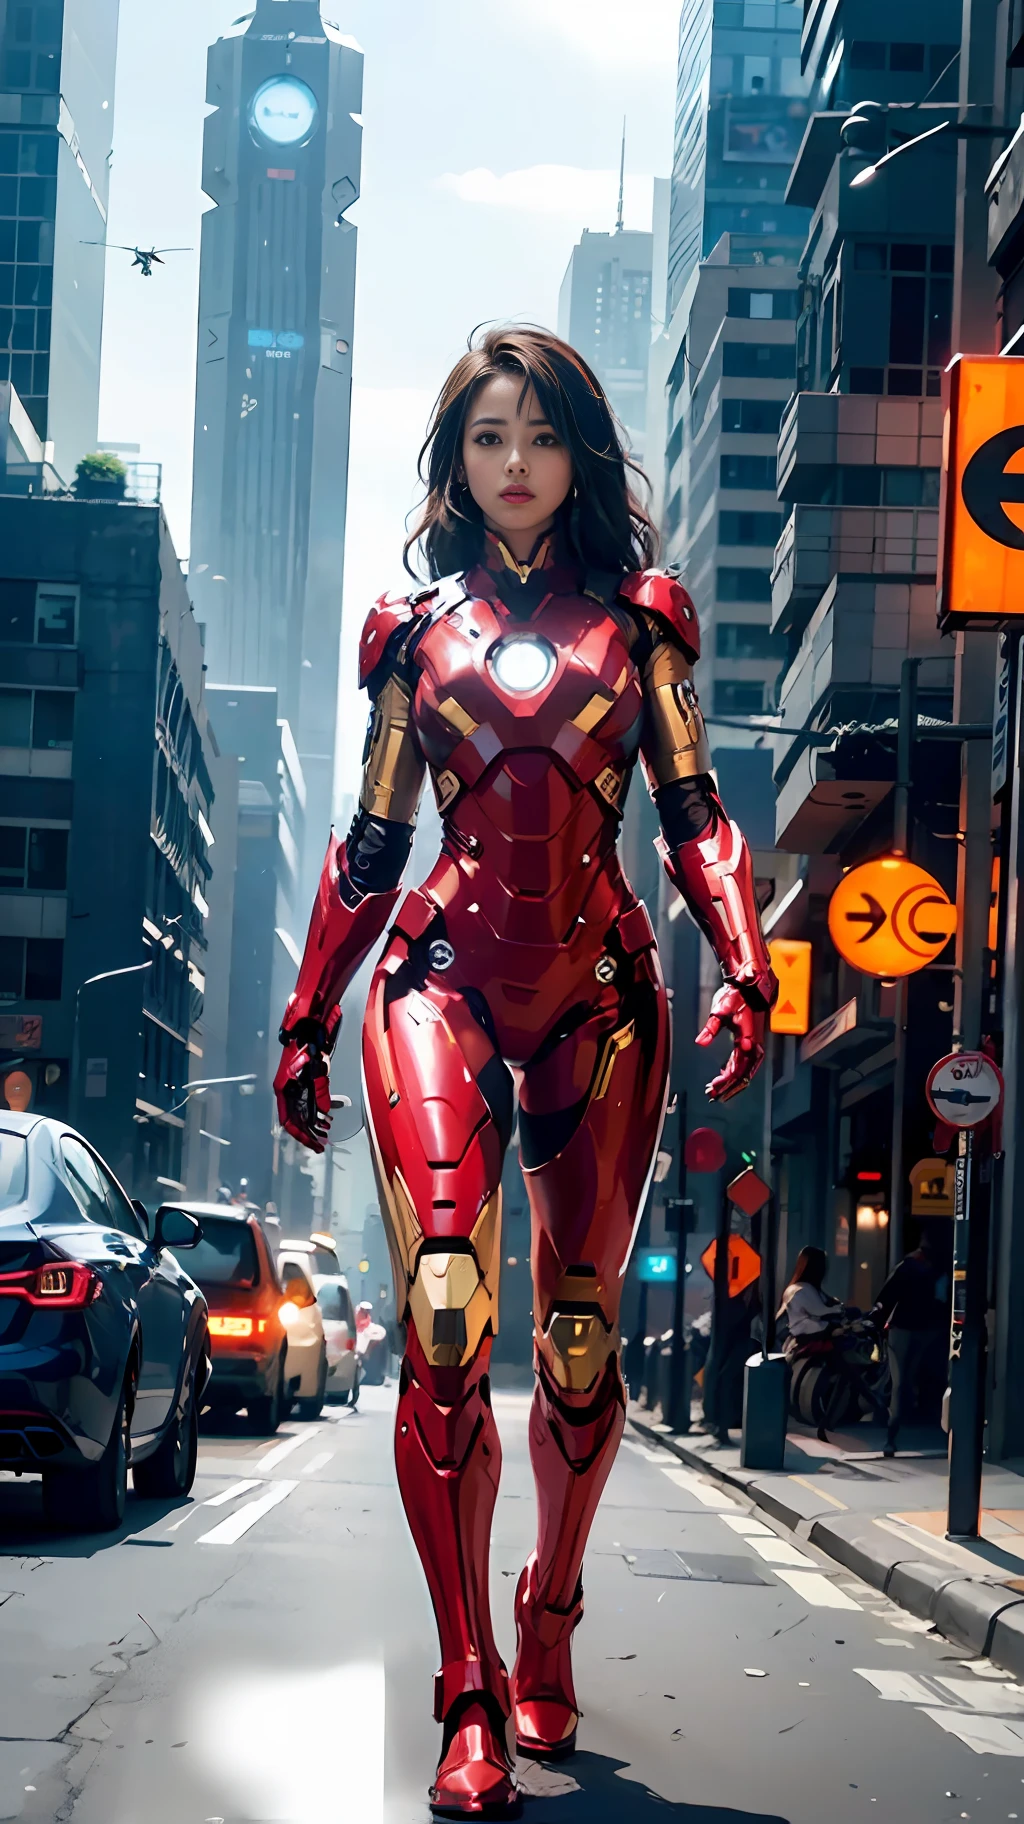 8K, 현실적인, 매력적인, 매우 상세한, a 20 year old girl a sexy and 매력적인 woman inspired by Iron Man wearing a shiny Iron Man mech. 그녀는 섹시함과 자신감을 갖고 옷을 입는다, 아이언맨을 완벽하게 해석하다&#39;힘과 카리스마. 사이버펑크 스타일의 도시 야경 속, a sexy and 매력적인 woman takes Iron Man&#39;코스프레를 테마로. 반짝이는 아이언맨 기계를 착용하고, 그녀는 높은 건물이 늘어선 거리에 서 있다. 도시의 밤 불빛은 밝다, 그녀의 메카를 생각하면서, 미래기술을 더하다. 주변 건물과 거리에는 사이버펑크 요소가 가득, 네온 불빛과 같은, 첨단 장비와 미래 지향적인 건축 디자인. 전체 장면은 미래 지향적이고 공상 과학적인 분위기로 가득 차 있습니다.. 이 고화질, 고품질 사진은 놀라운 시각적 즐거움을 선사합니다, 섹시함의 완벽한 조합, 미래와 공상 과학 요소. oc 렌더링, 극적인 조명, 수상 경력에 빛나는 품질